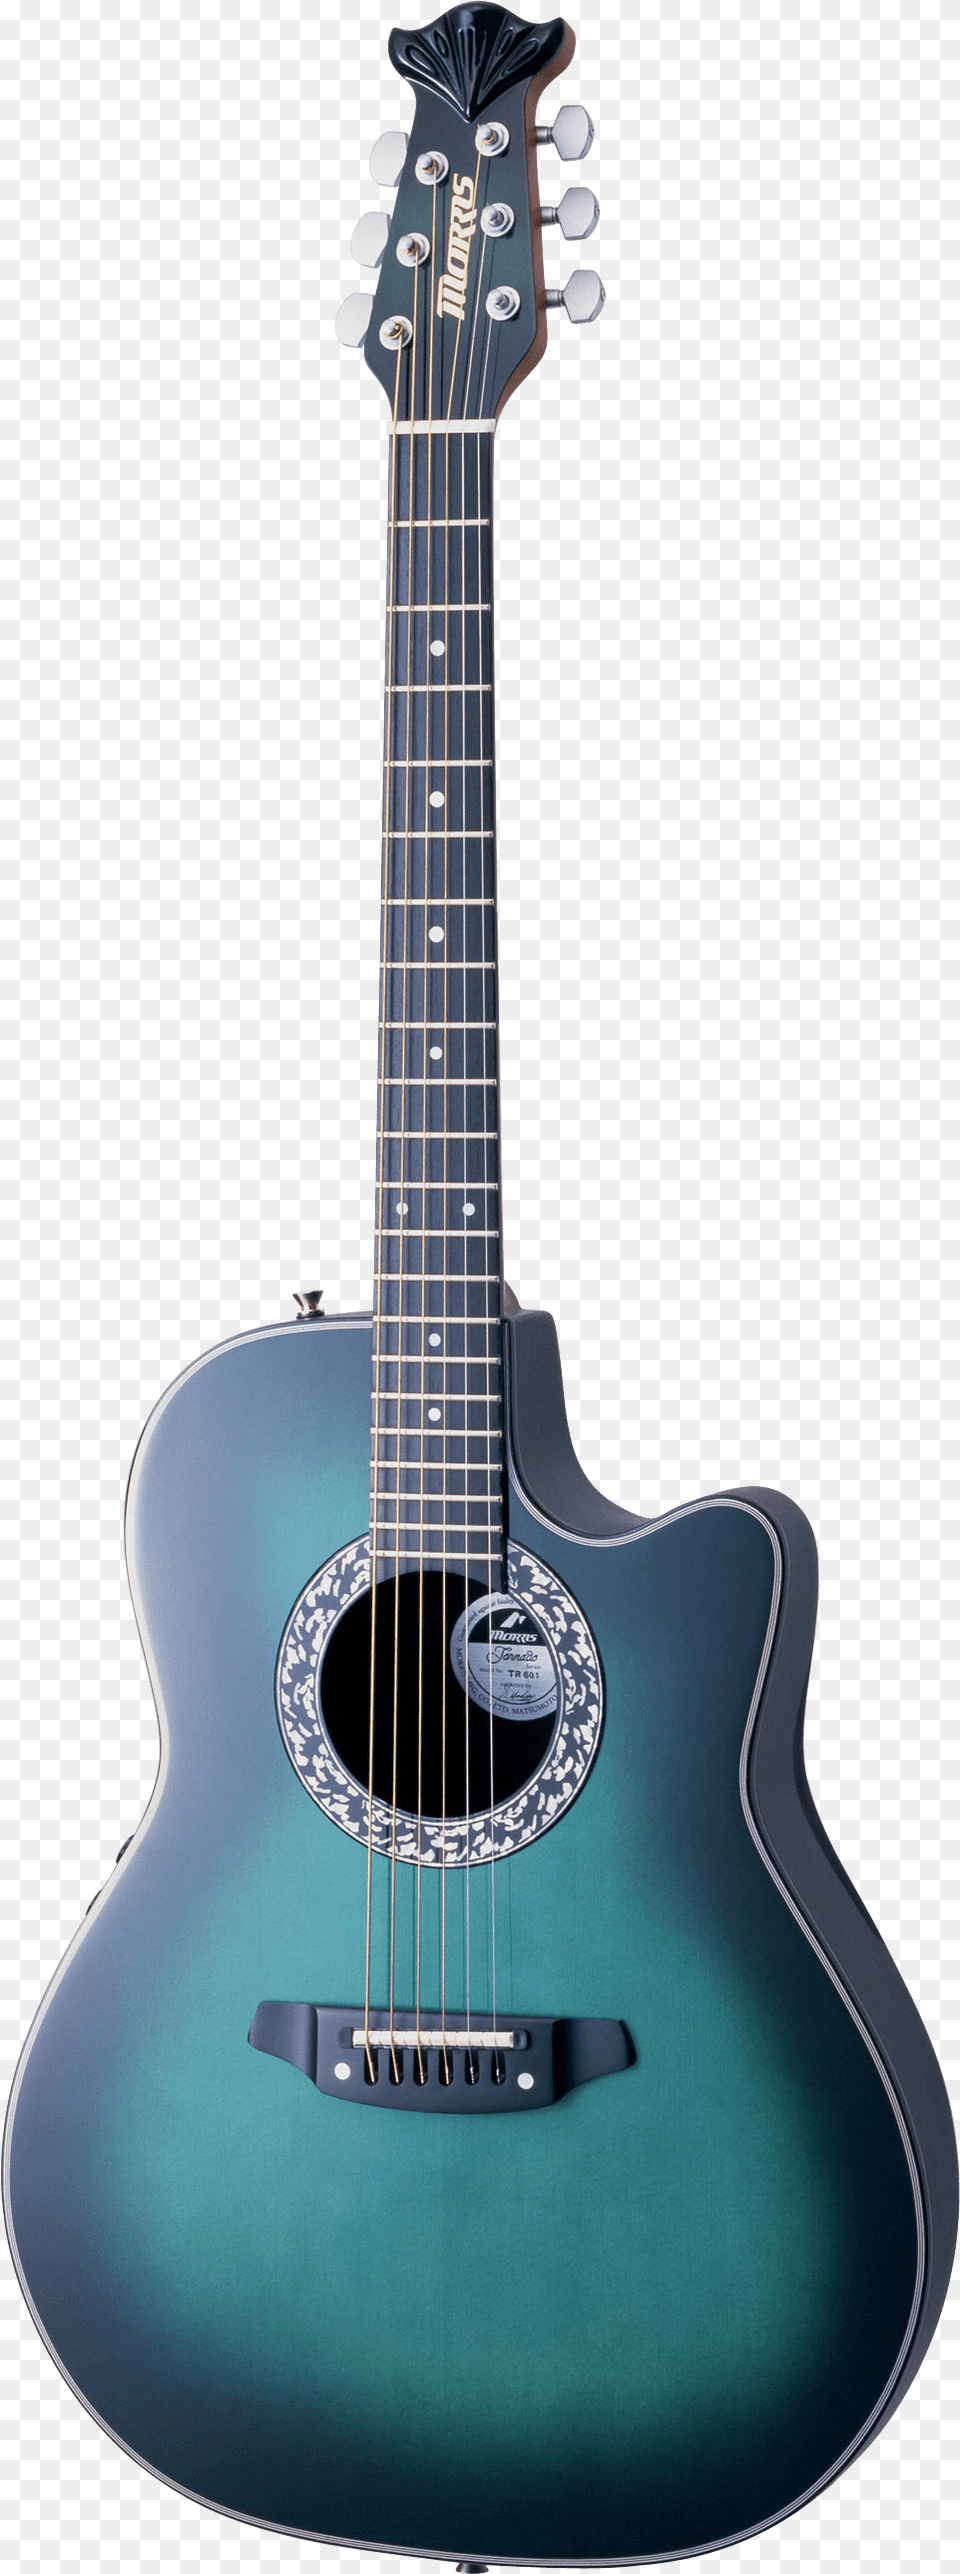 Guitar Musical Instrument, Bass Guitar Png Image